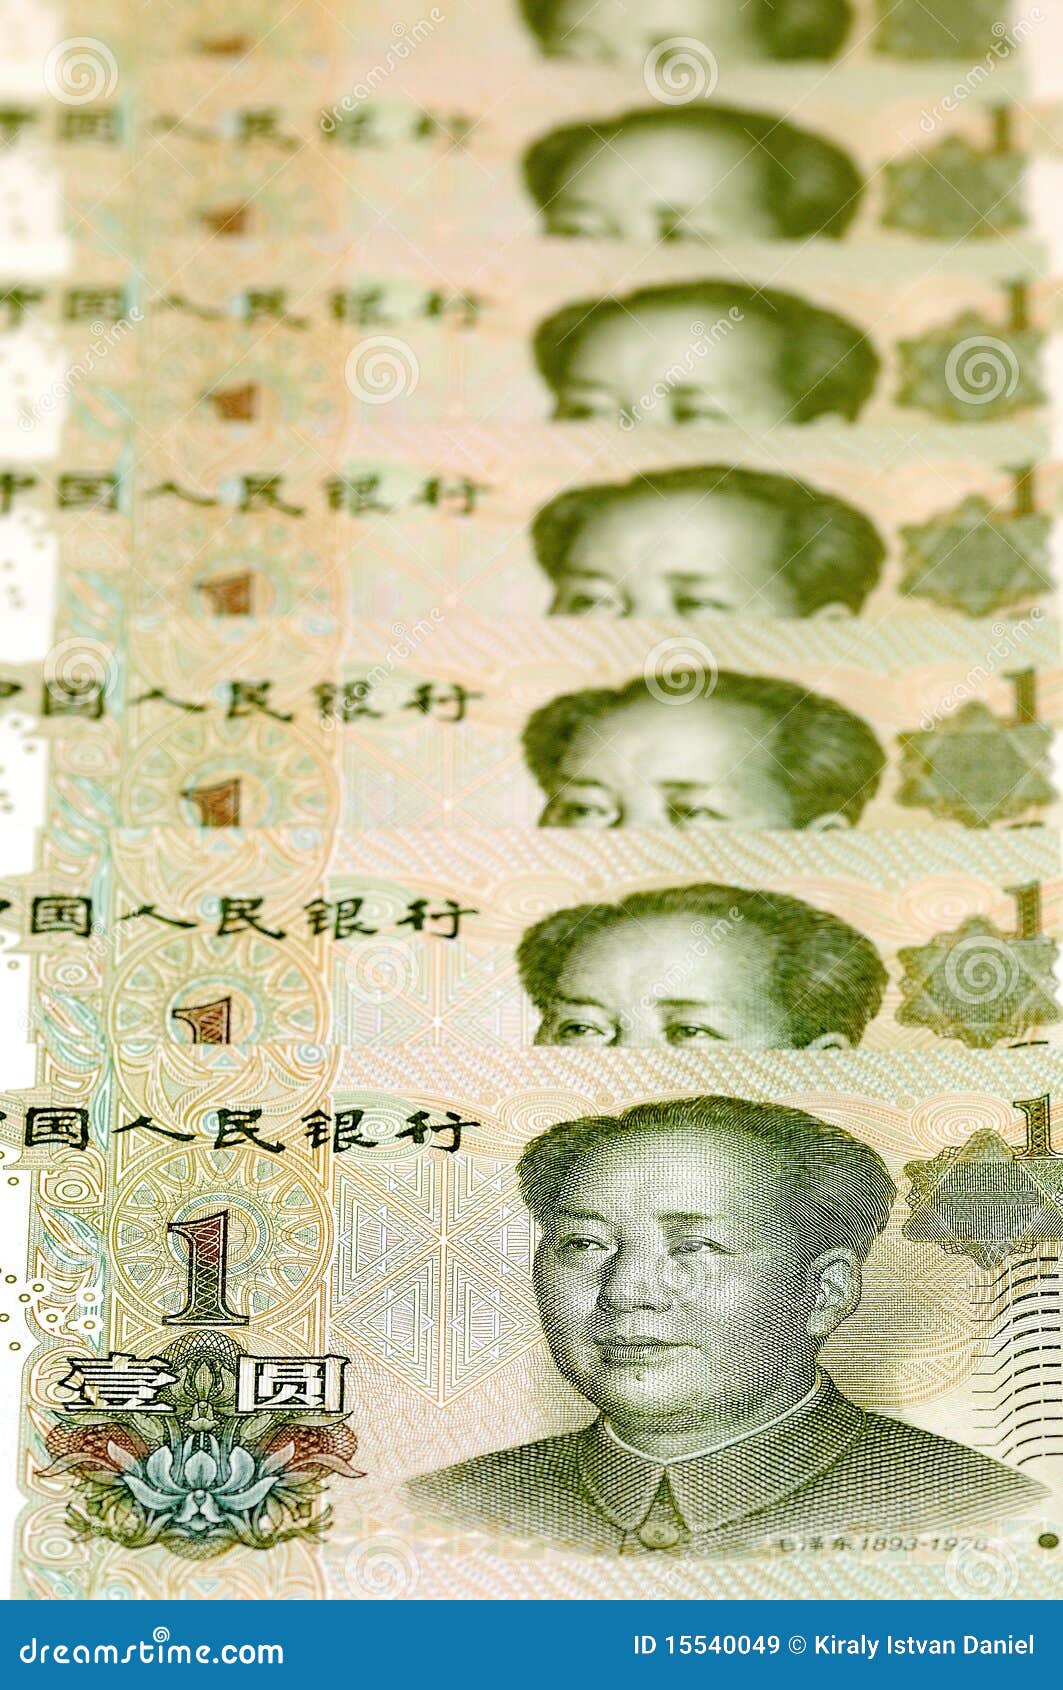 yuan - chinese money